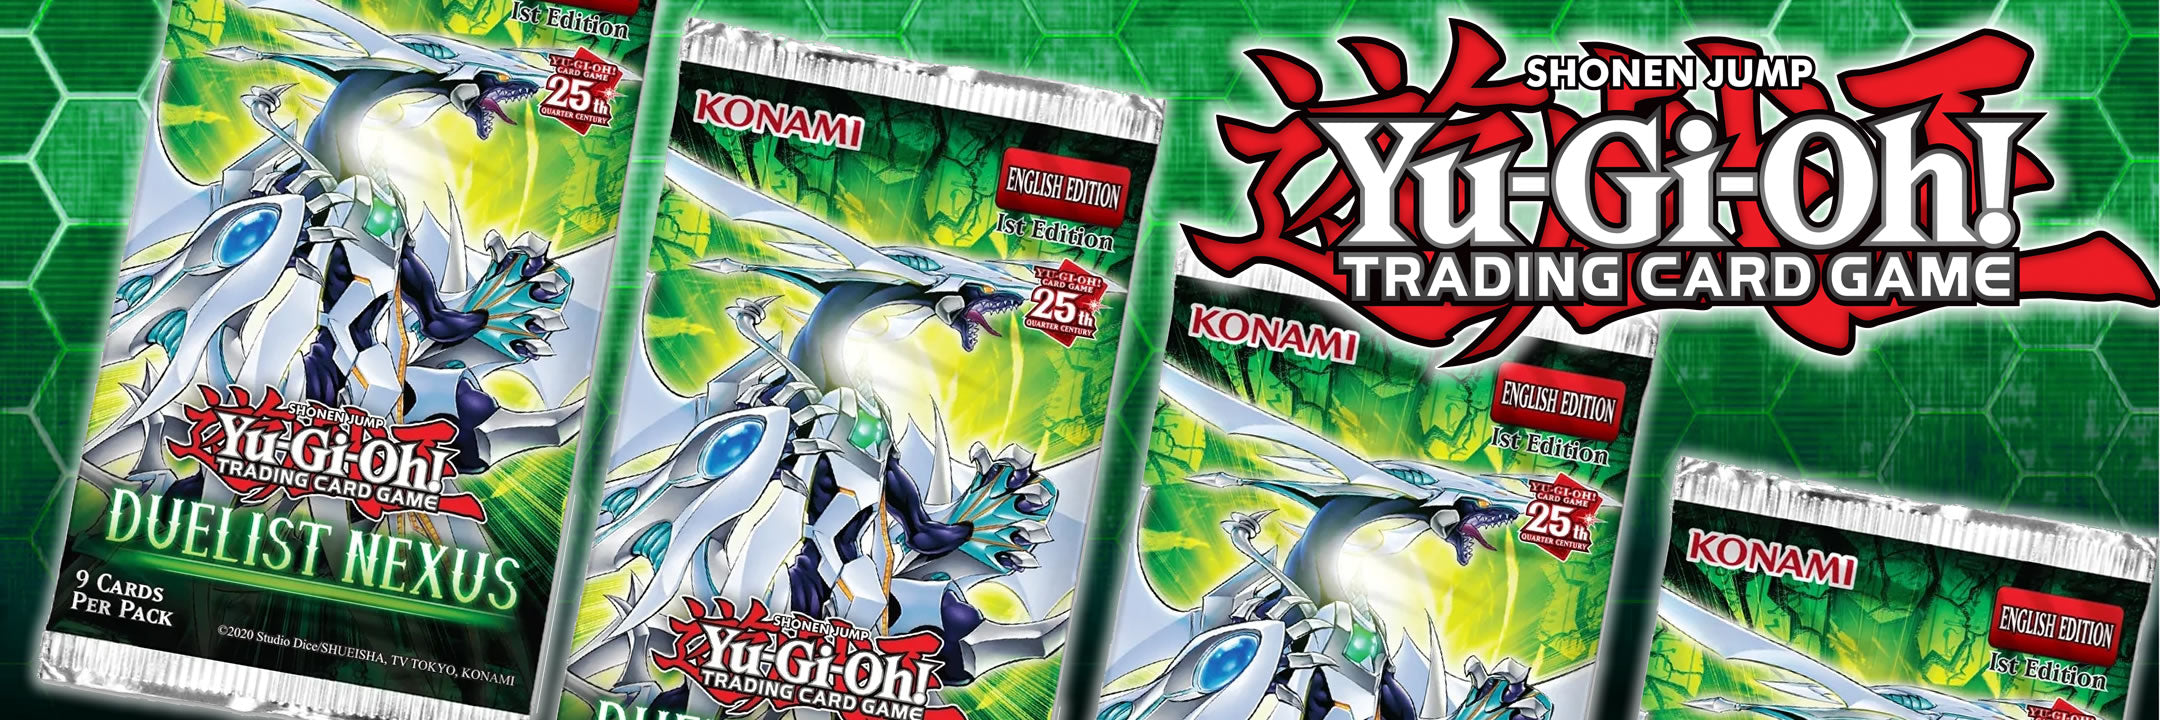 Yu-Gi-Oh! Trading Card Game - Duelist Nexus